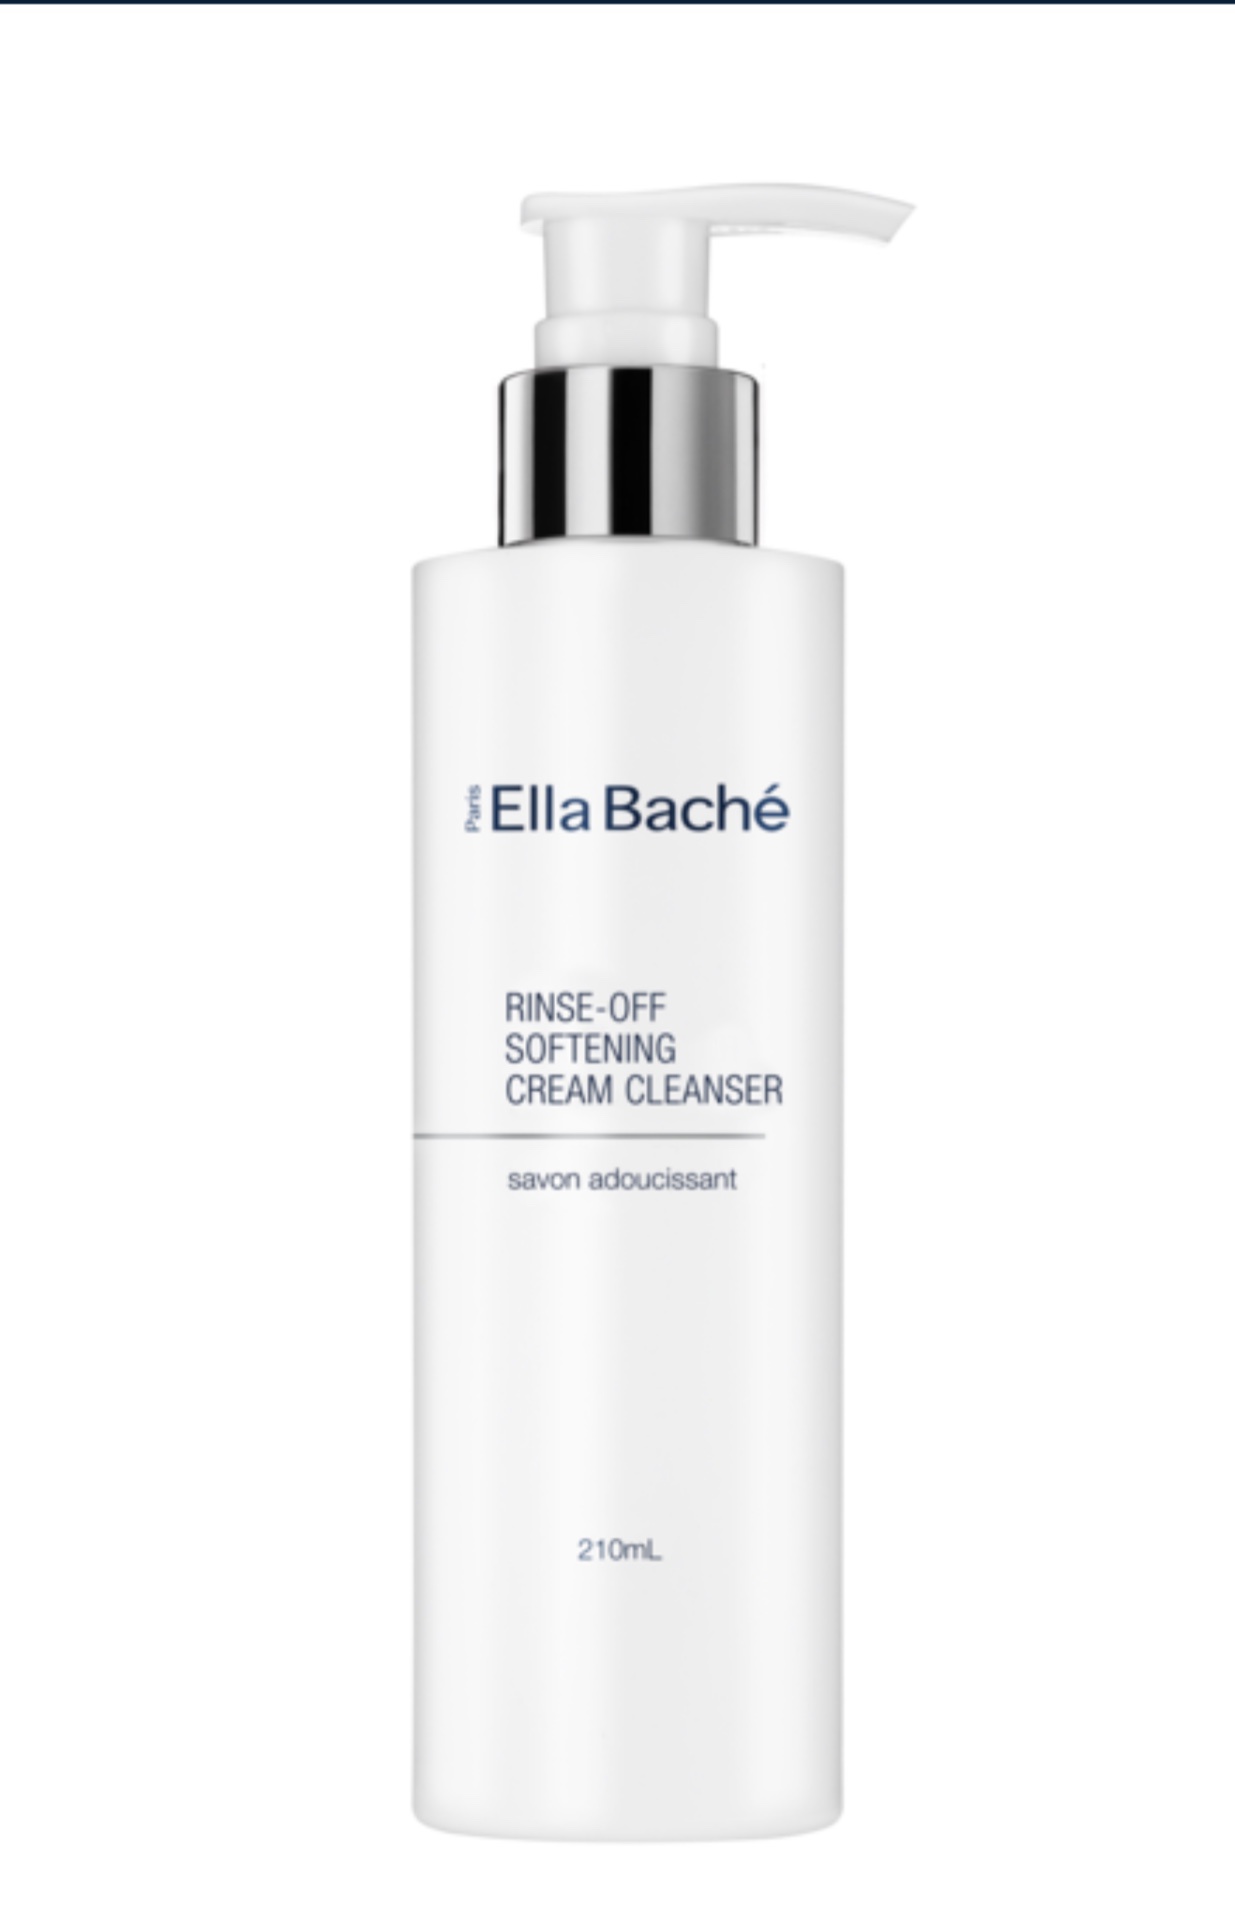 Ella Baché Rinse-Off Softening Cream Cleanser (Savon Adoucissant)